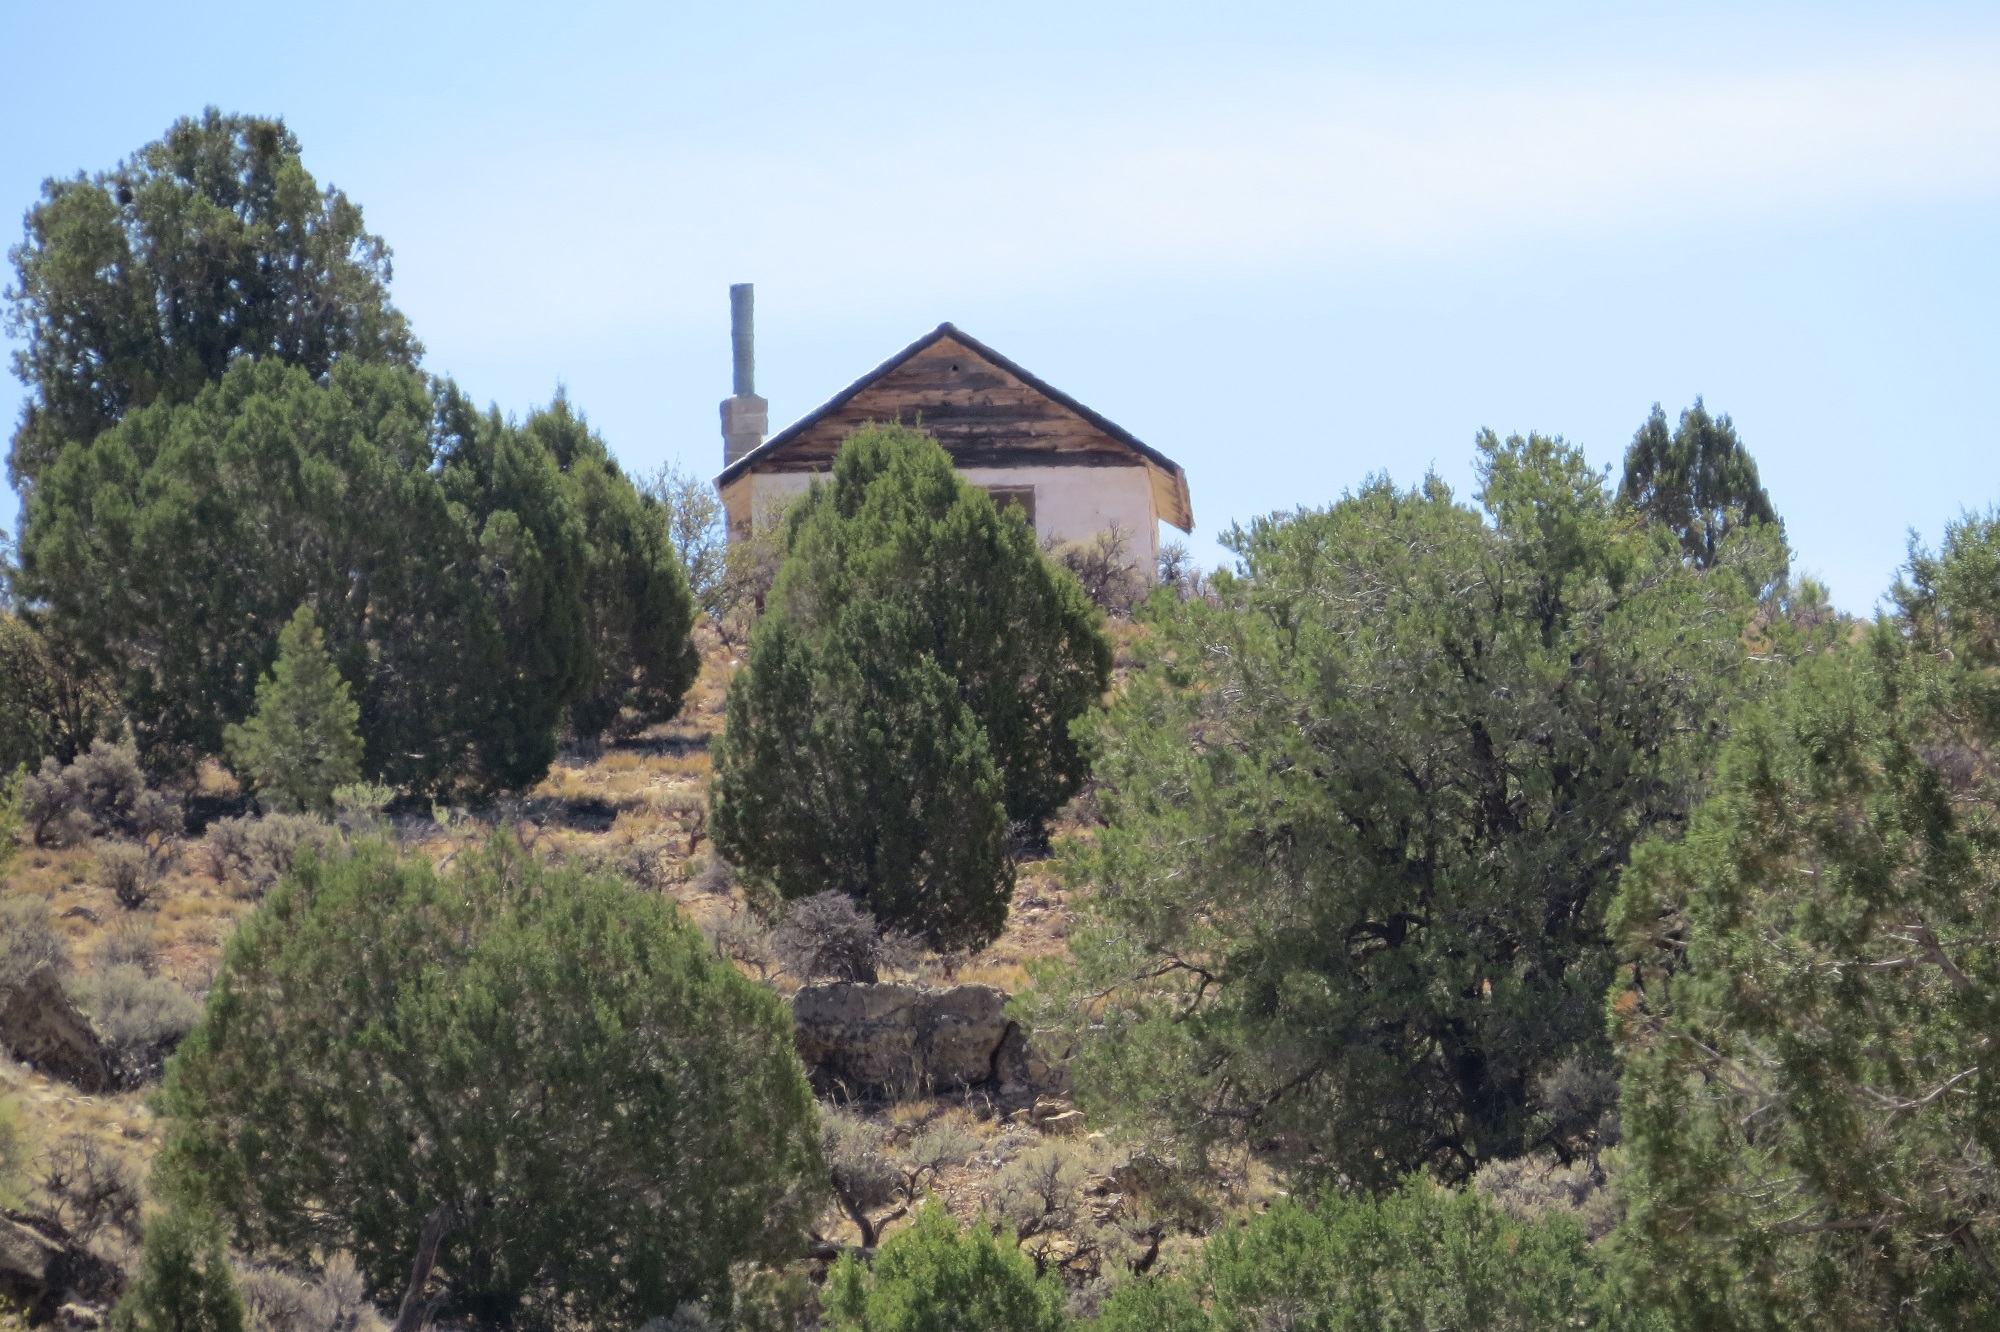 A cabin on the Arizona Strip